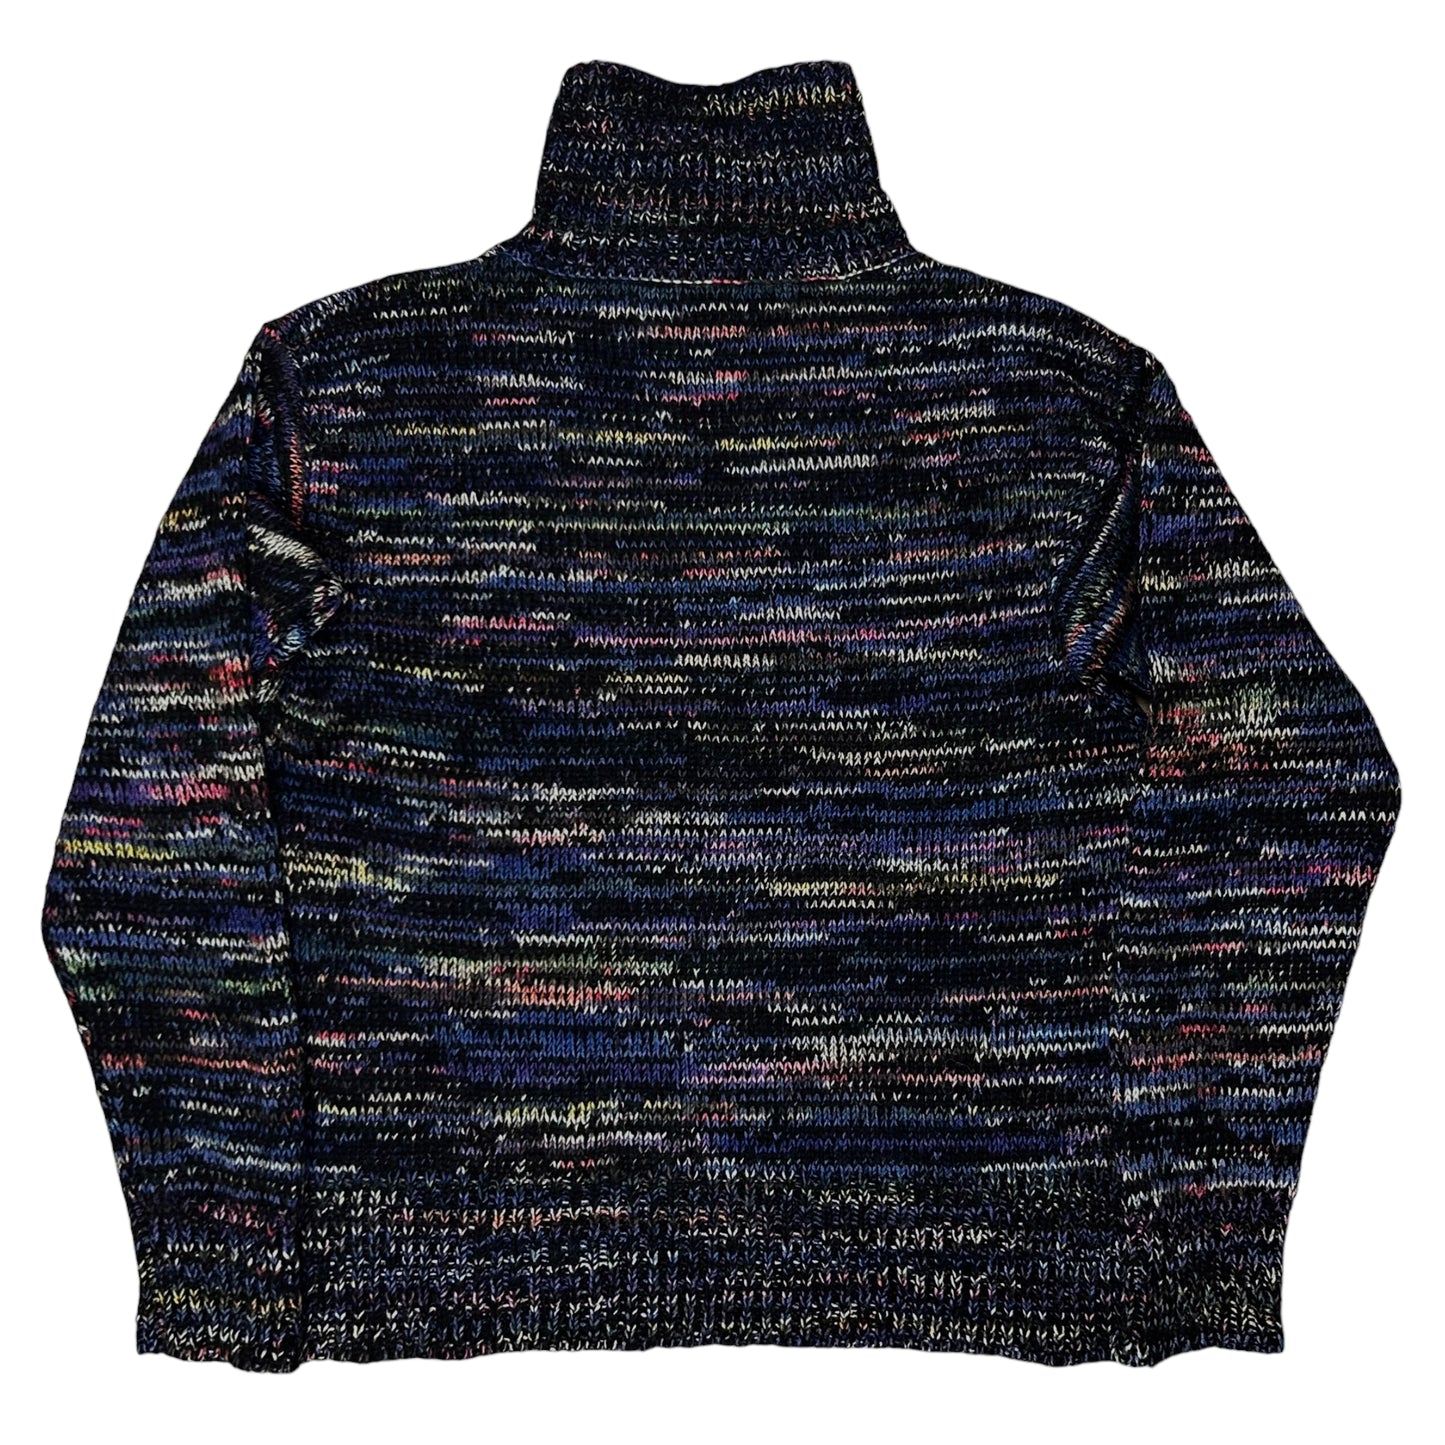 Dries Van Noten Marled Knit Sweater - AW19